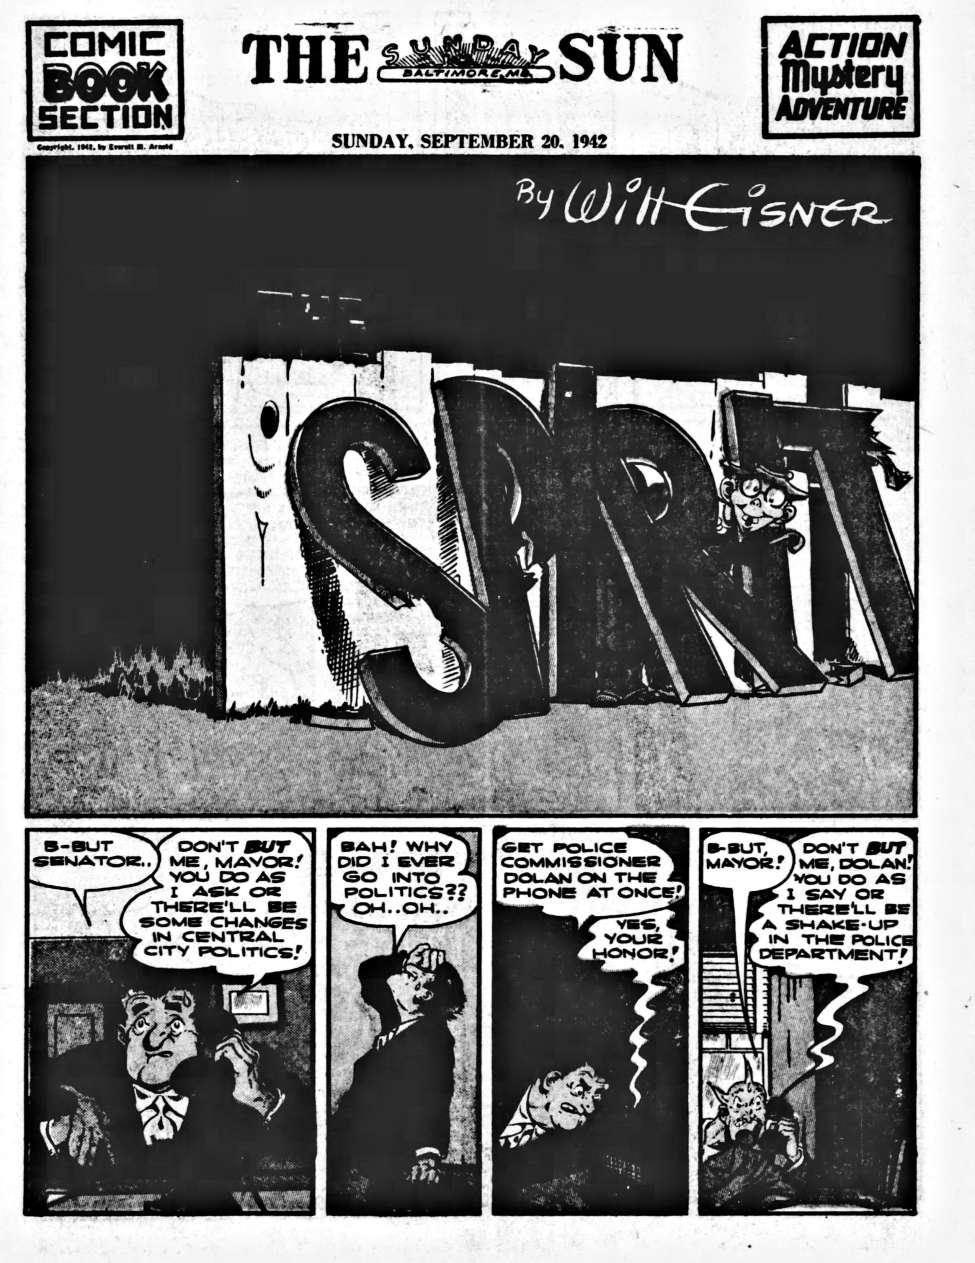 Book Cover For The Spirit (1942-09-20) - Baltimore Sun (b/w)